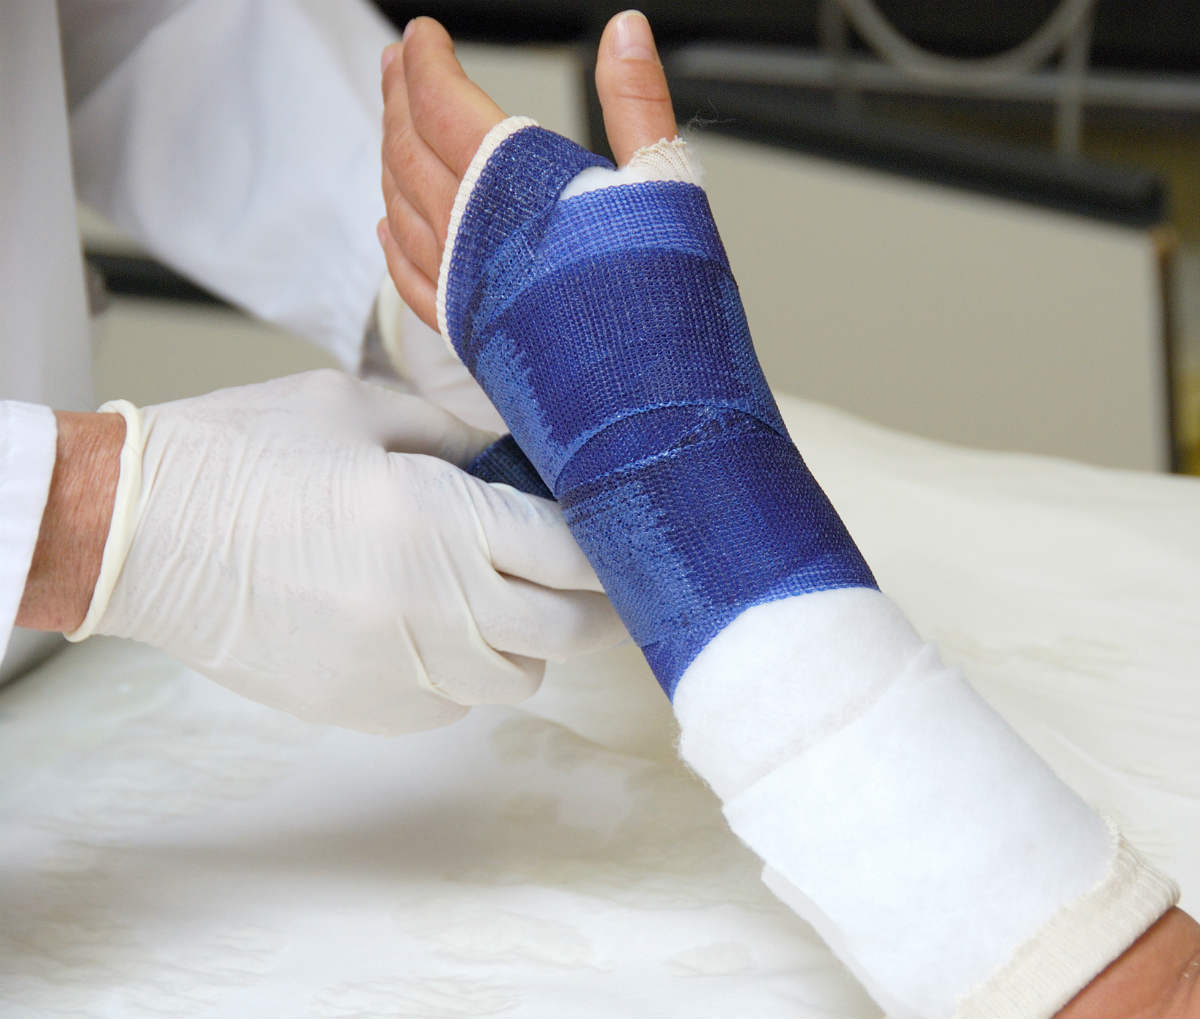 broken arm worker compensation